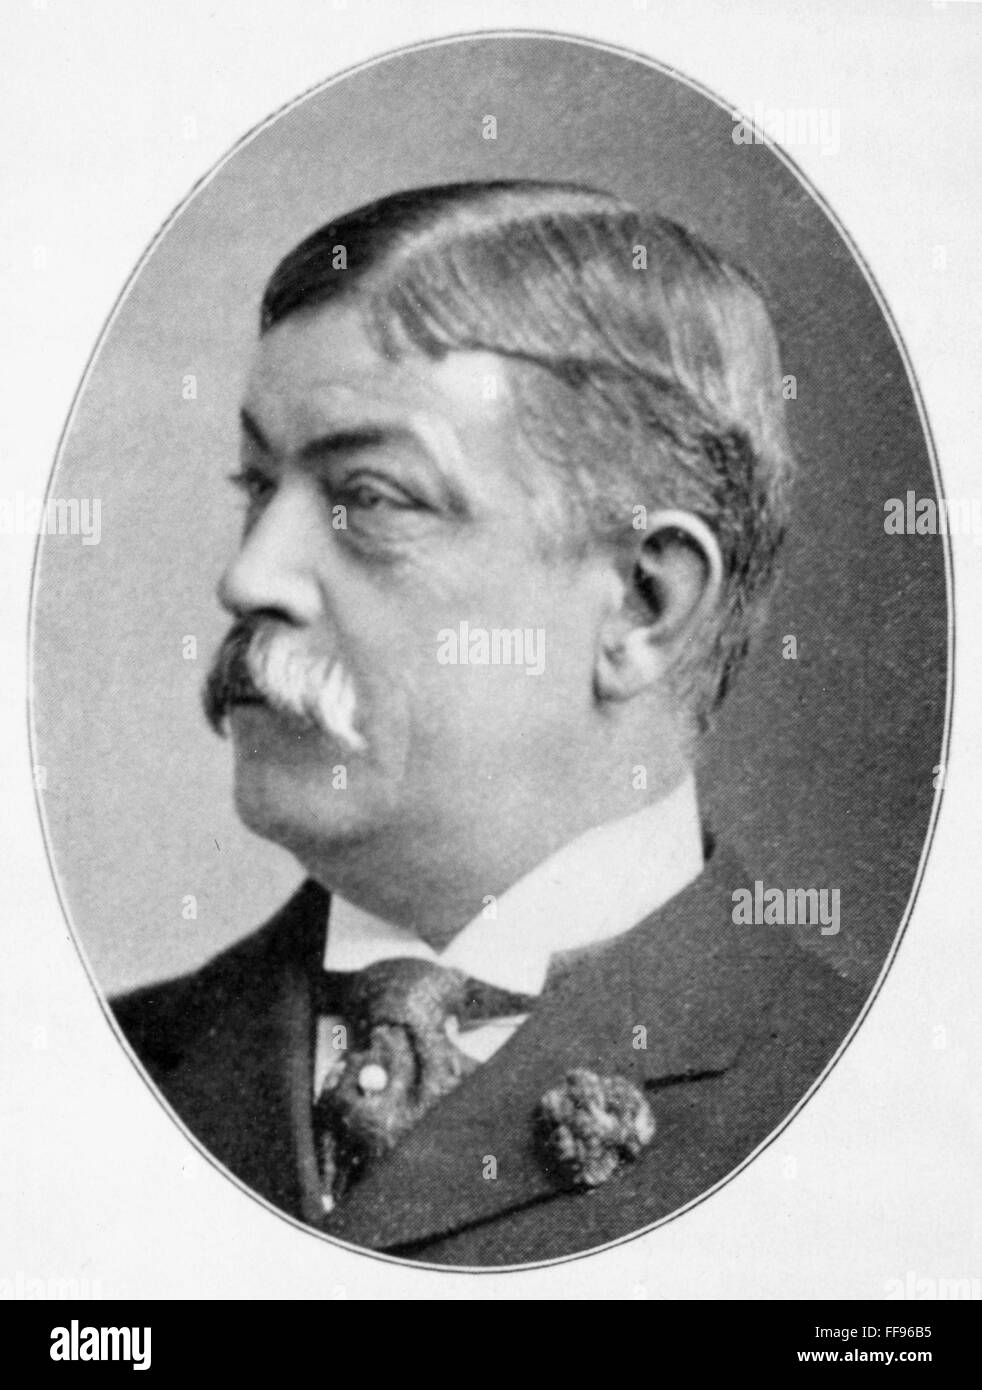 DANIEL LORD fl. 1890s. /nAmerican lawyer. Stock Photo